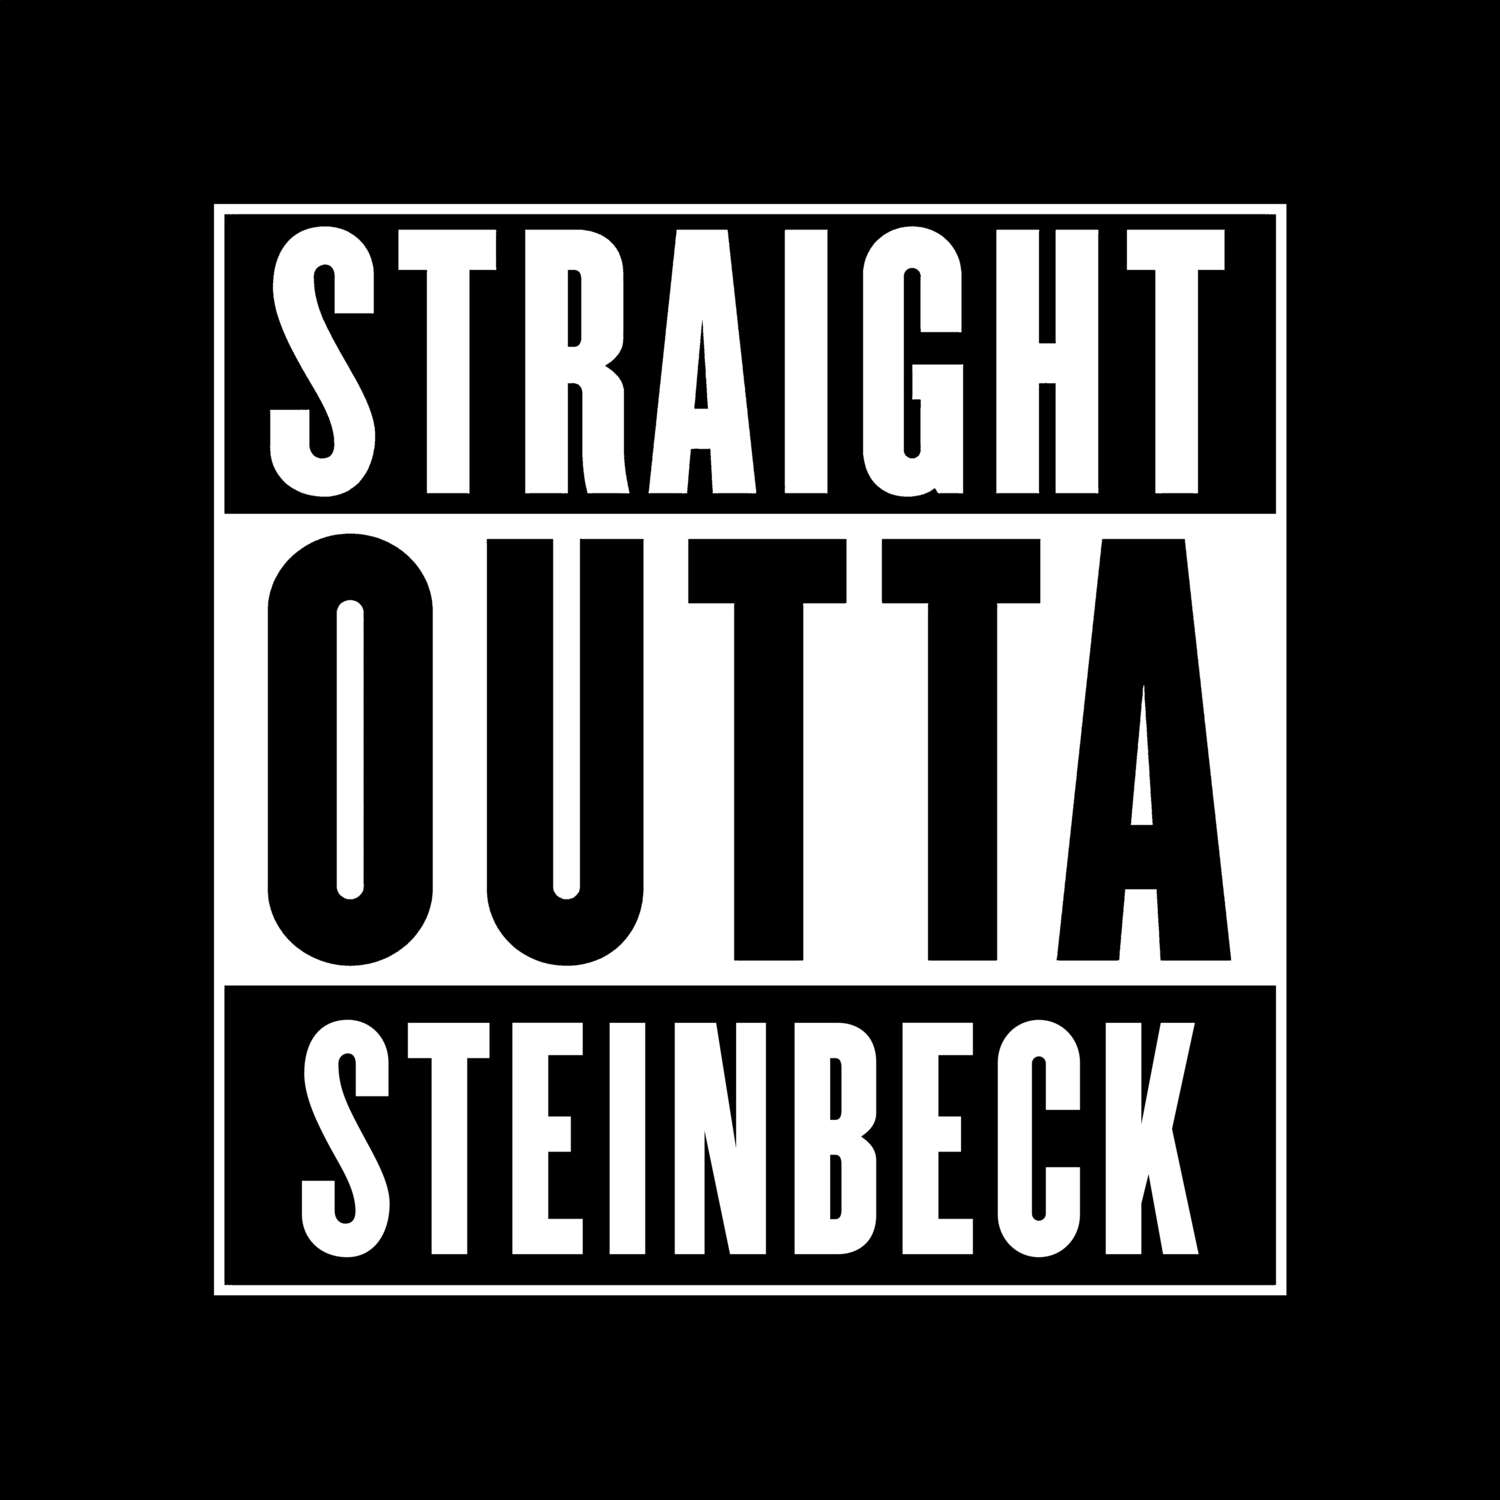 Steinbeck T-Shirt »Straight Outta«